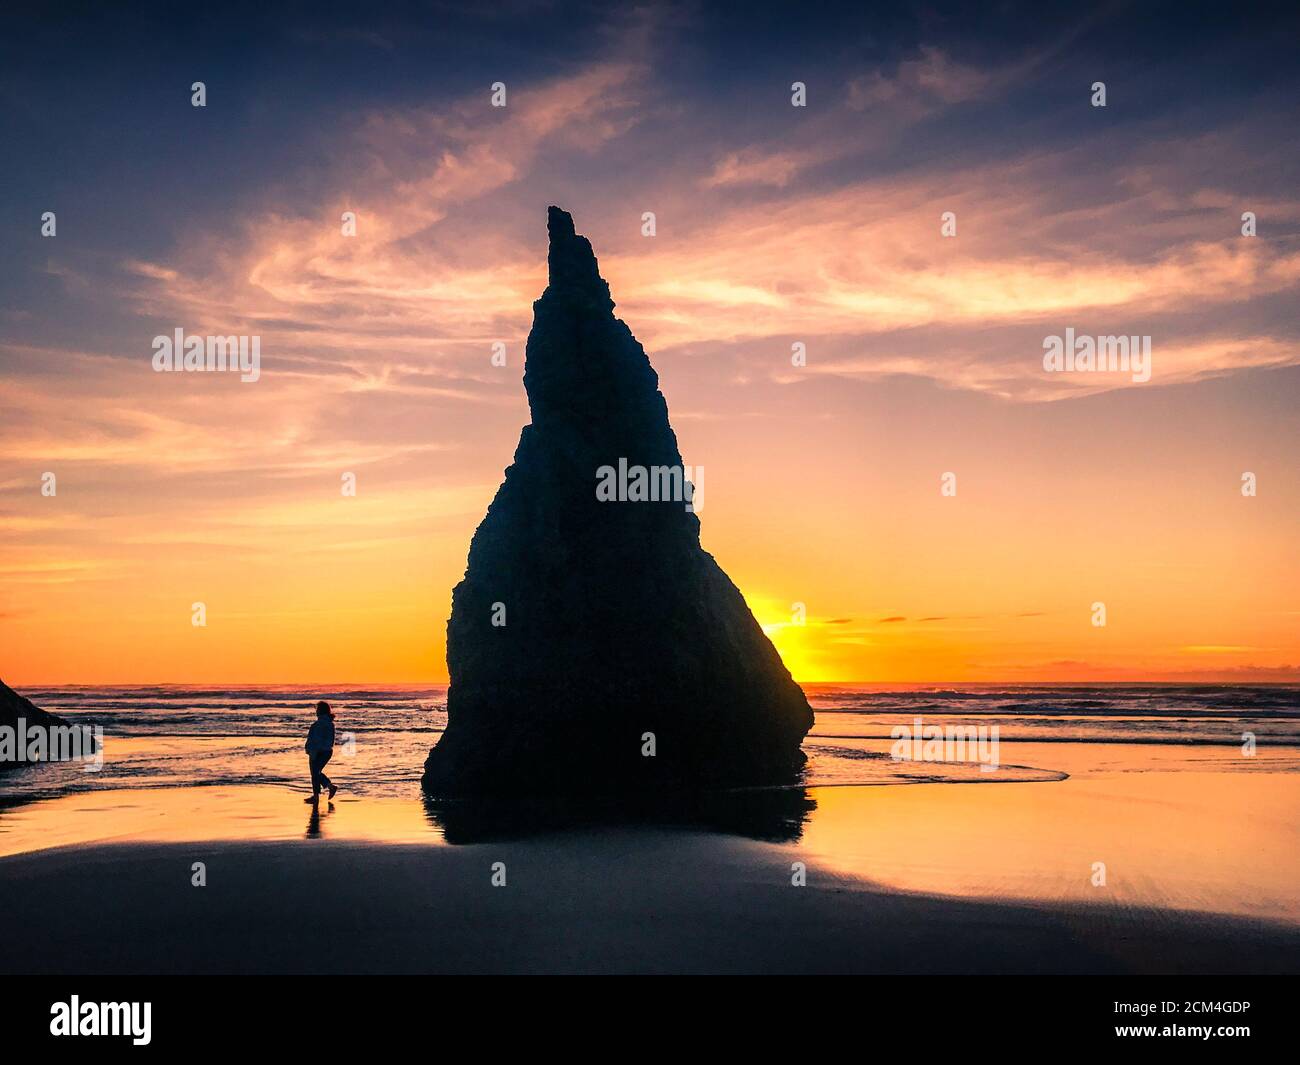 Der Tourist am Oregon Beach spaziert bei Sonnenuntergang am riesigen Meeresstapel vorbei. Stockfoto